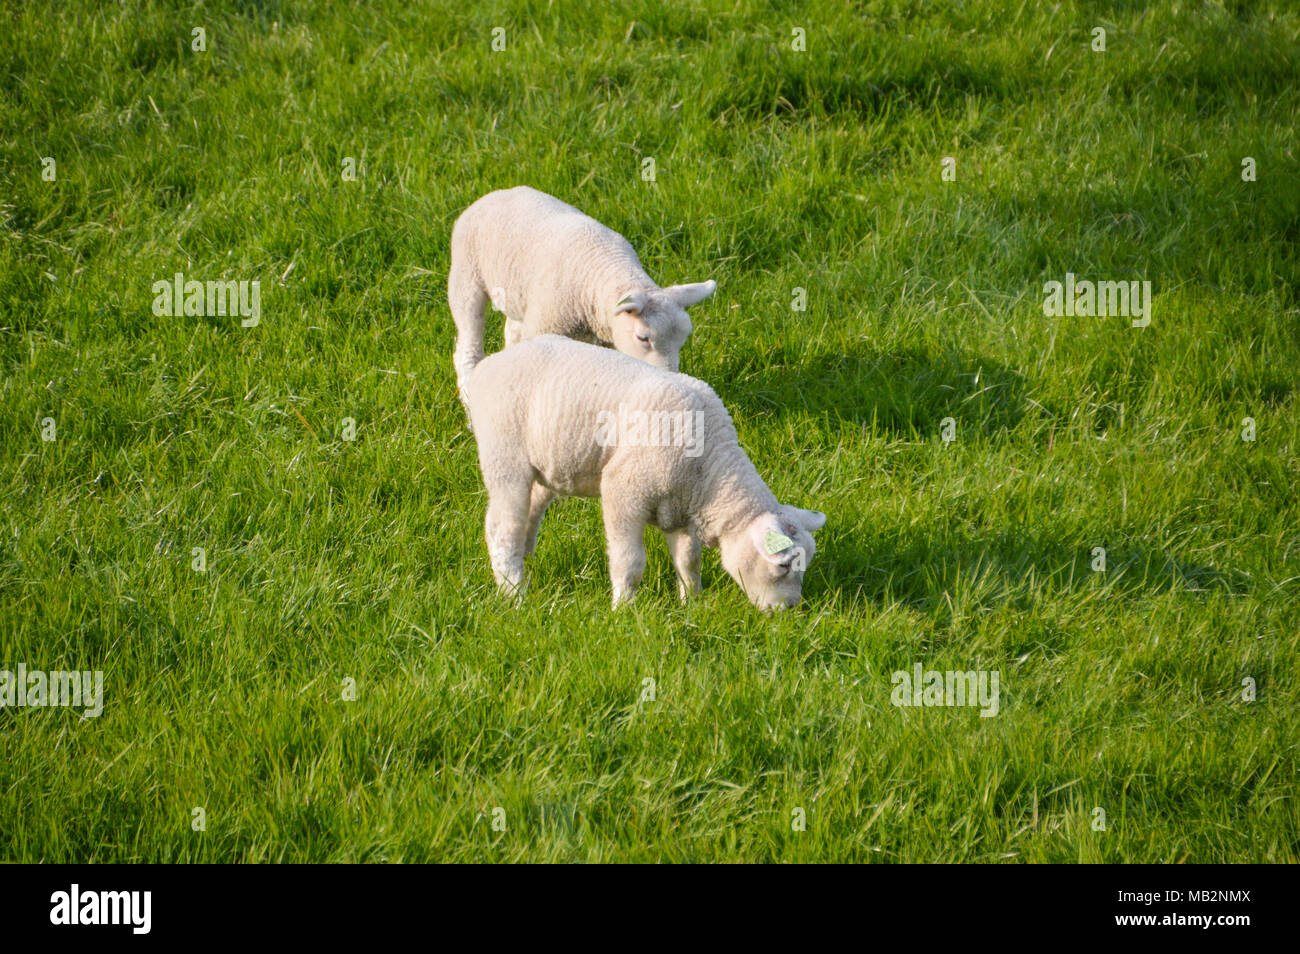 Lambs Eating Grass Stock Photo